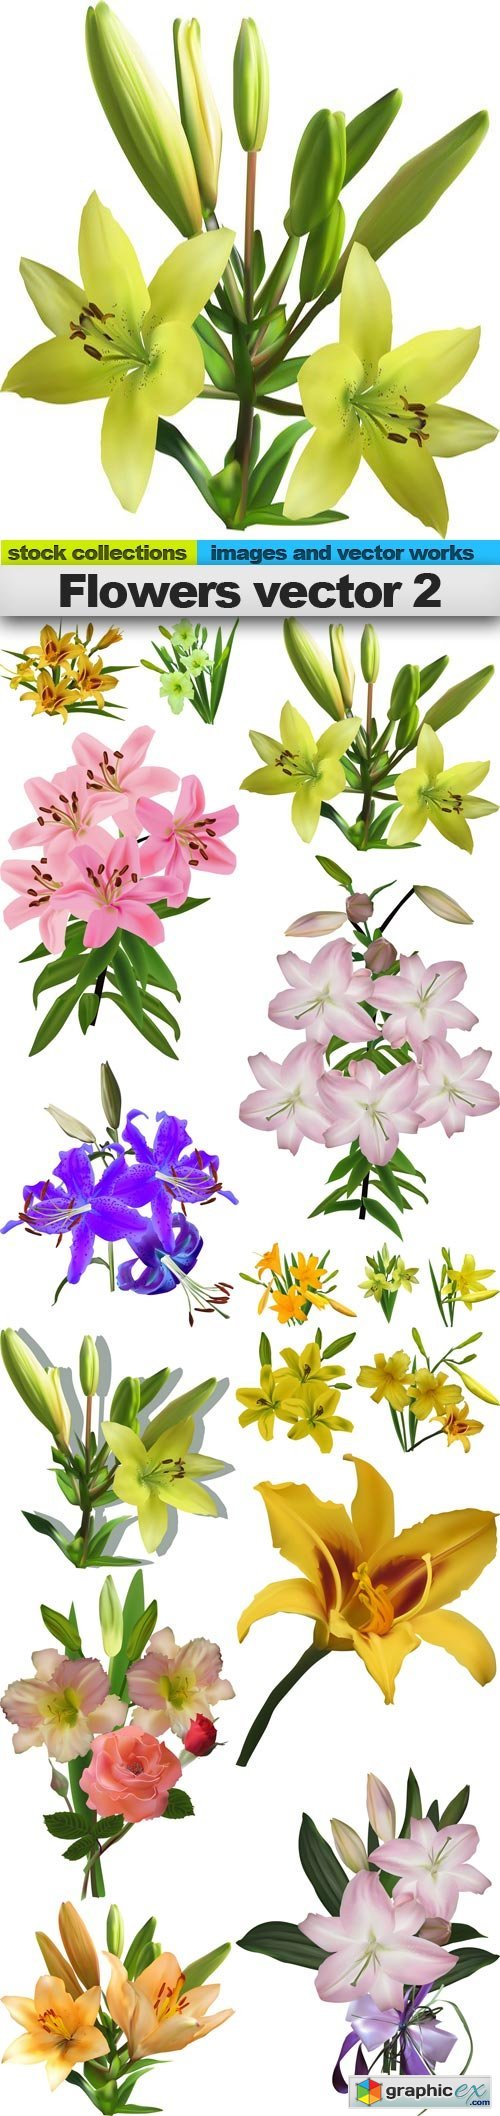 Flowers vector 2, 15 x EPS